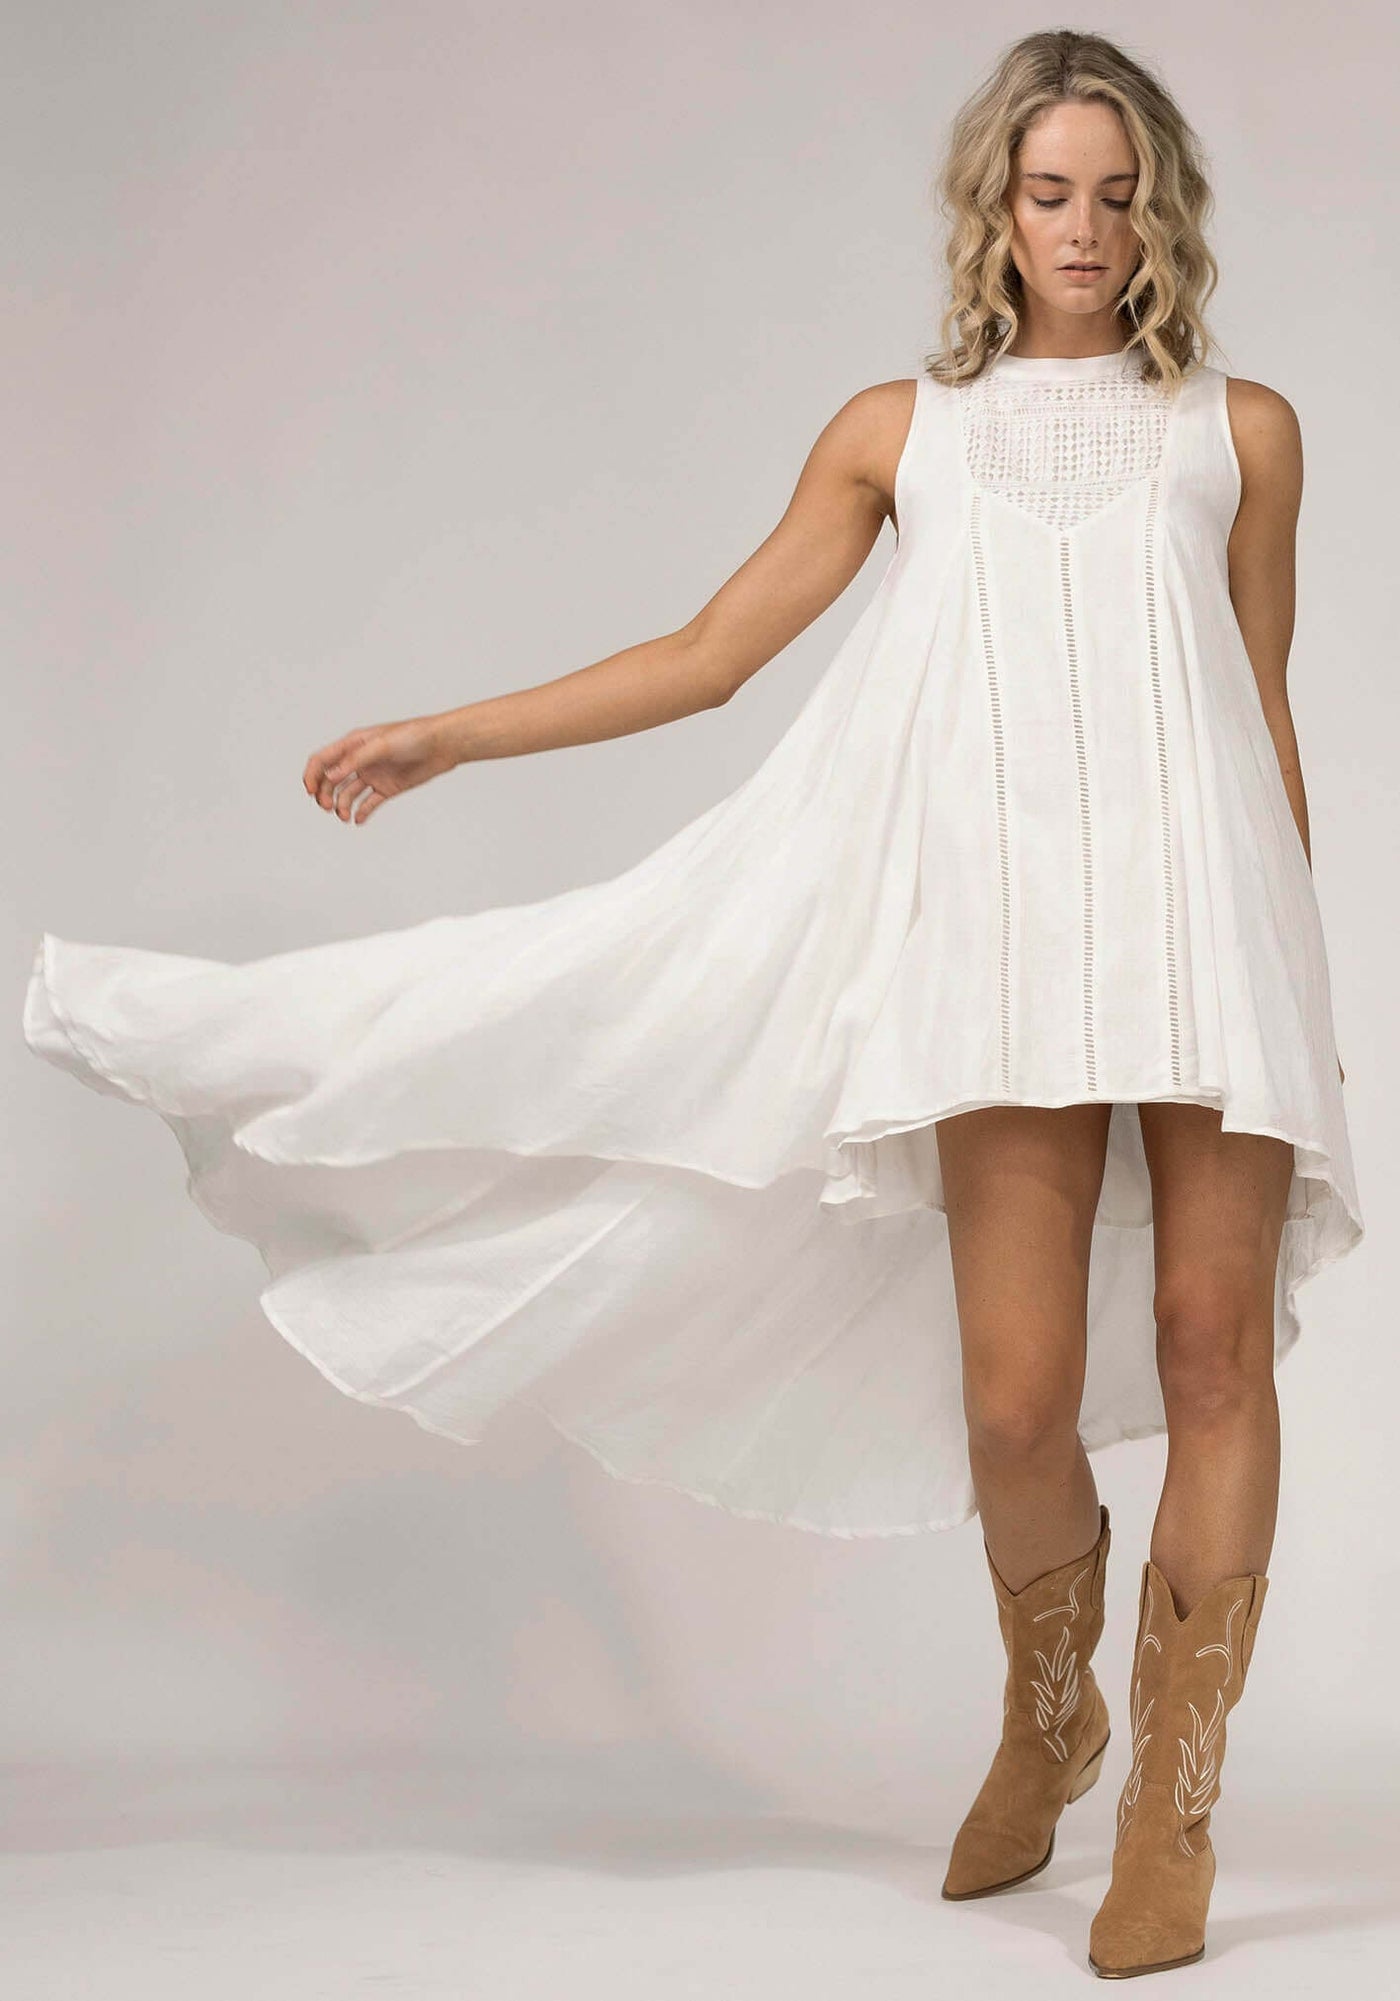 Beyond the Breakers White High Low Dress | Maxi Dress Australia